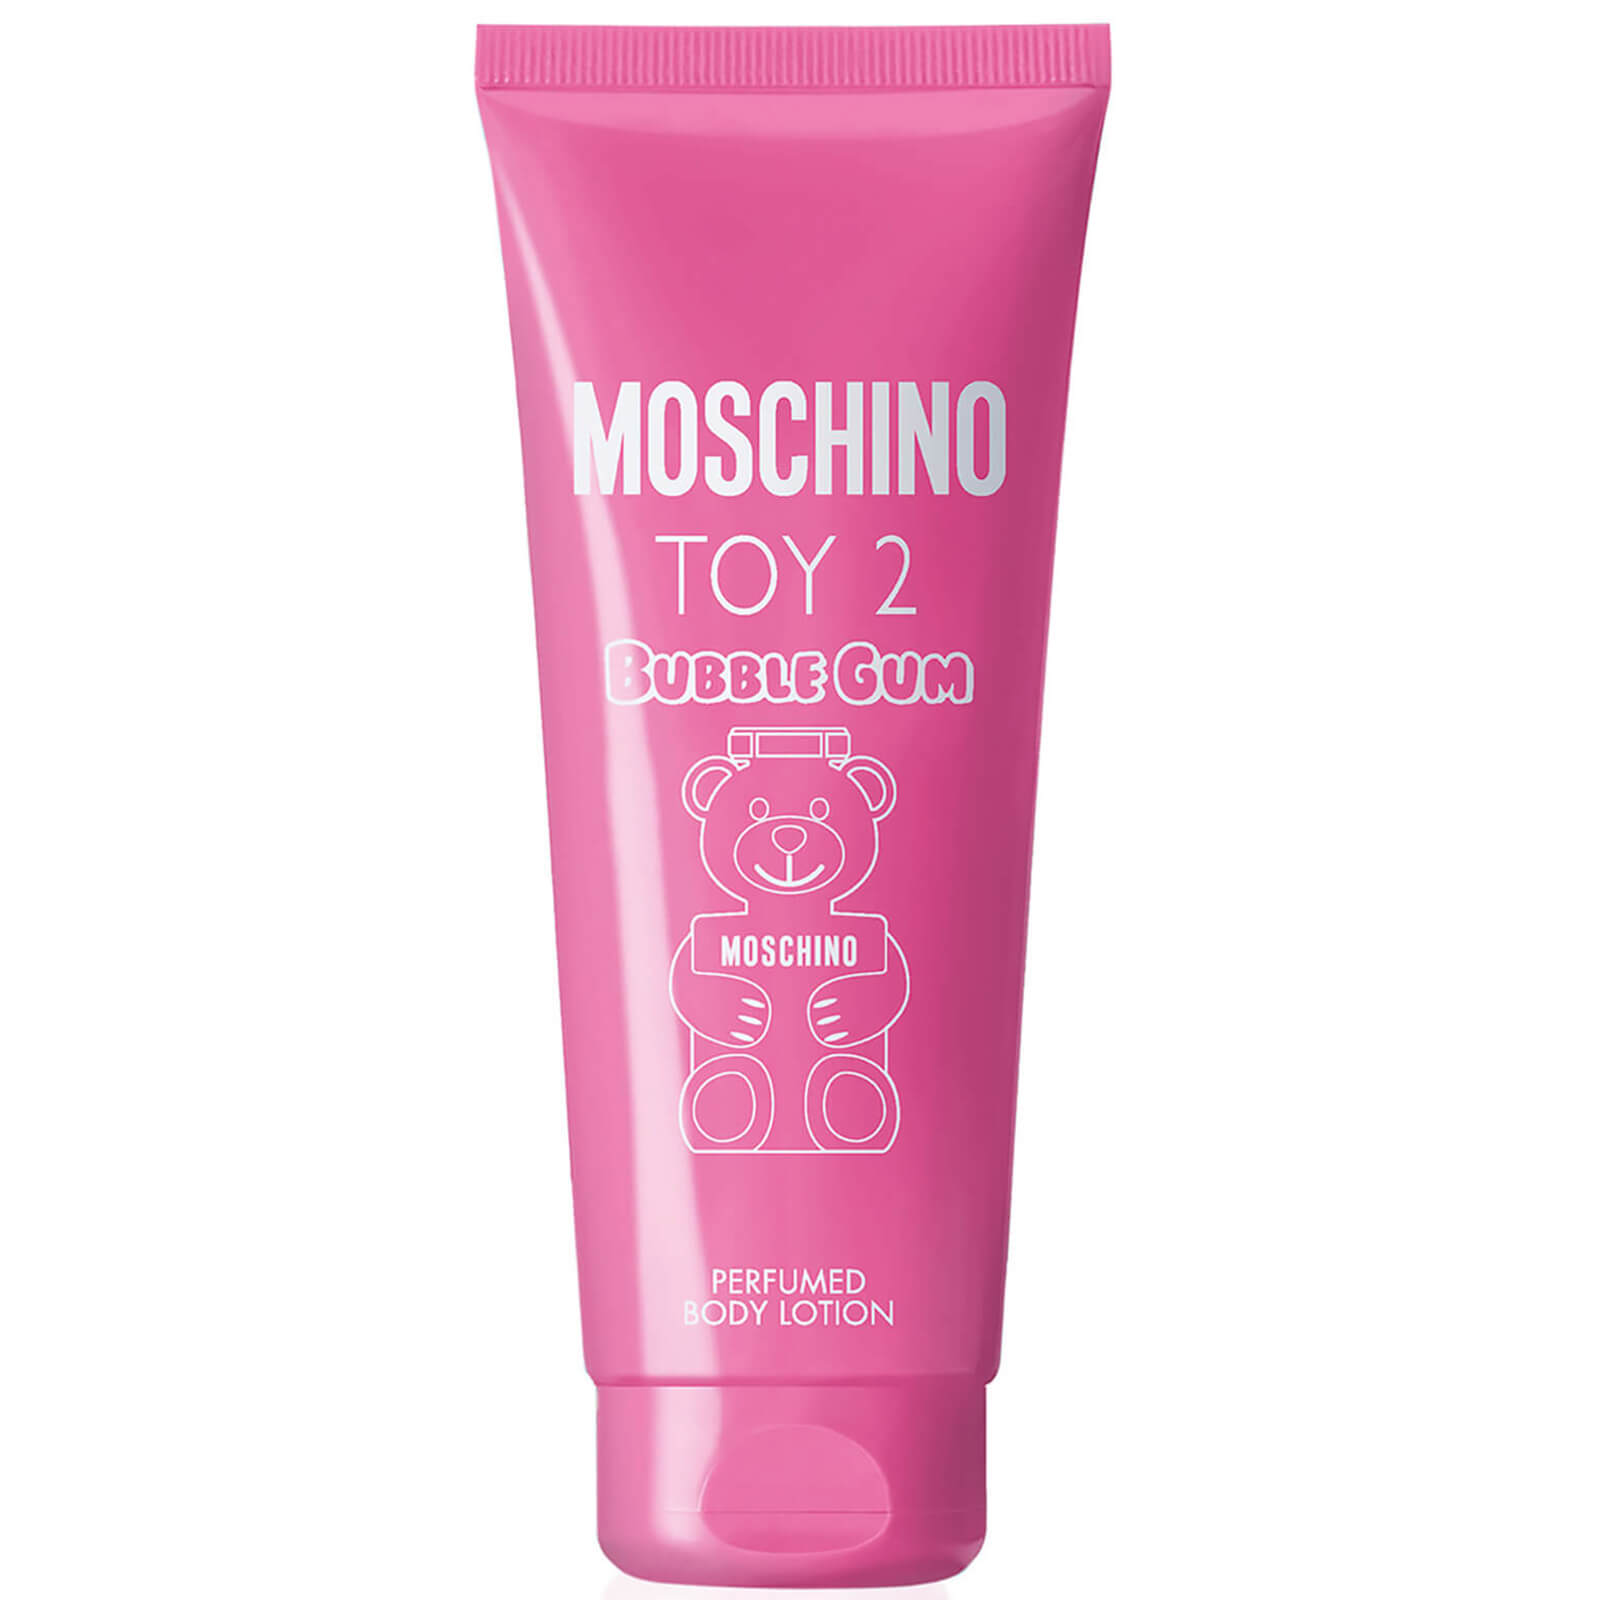 Image of Moschino Toy2 Bubblegum Body Lotion 200ml